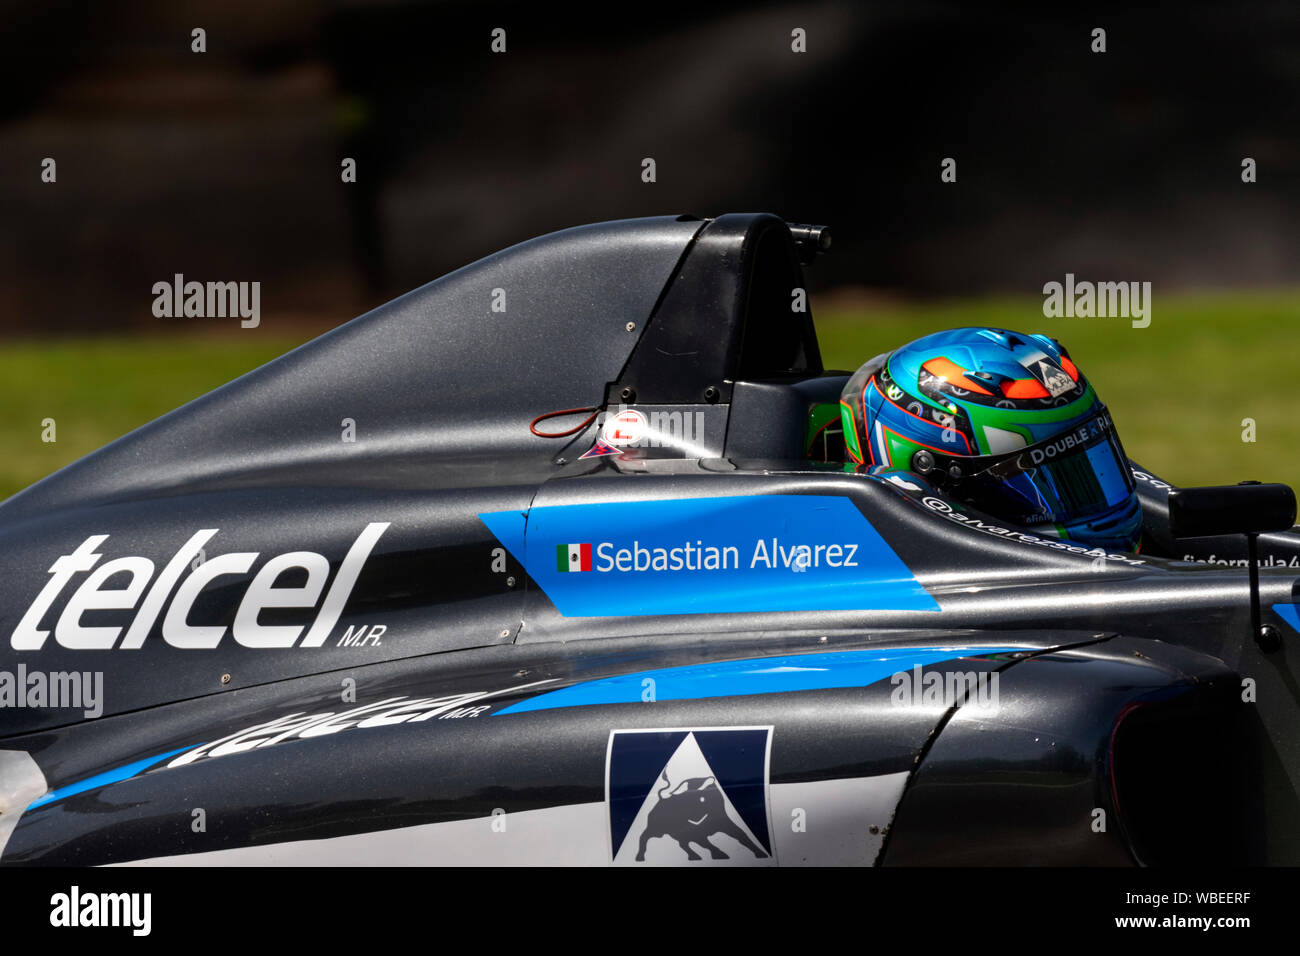 Auto 94, Fahrer, Sebastian Alvarez, Double R, Oulton Park F4 Meisterschaft Stockfoto